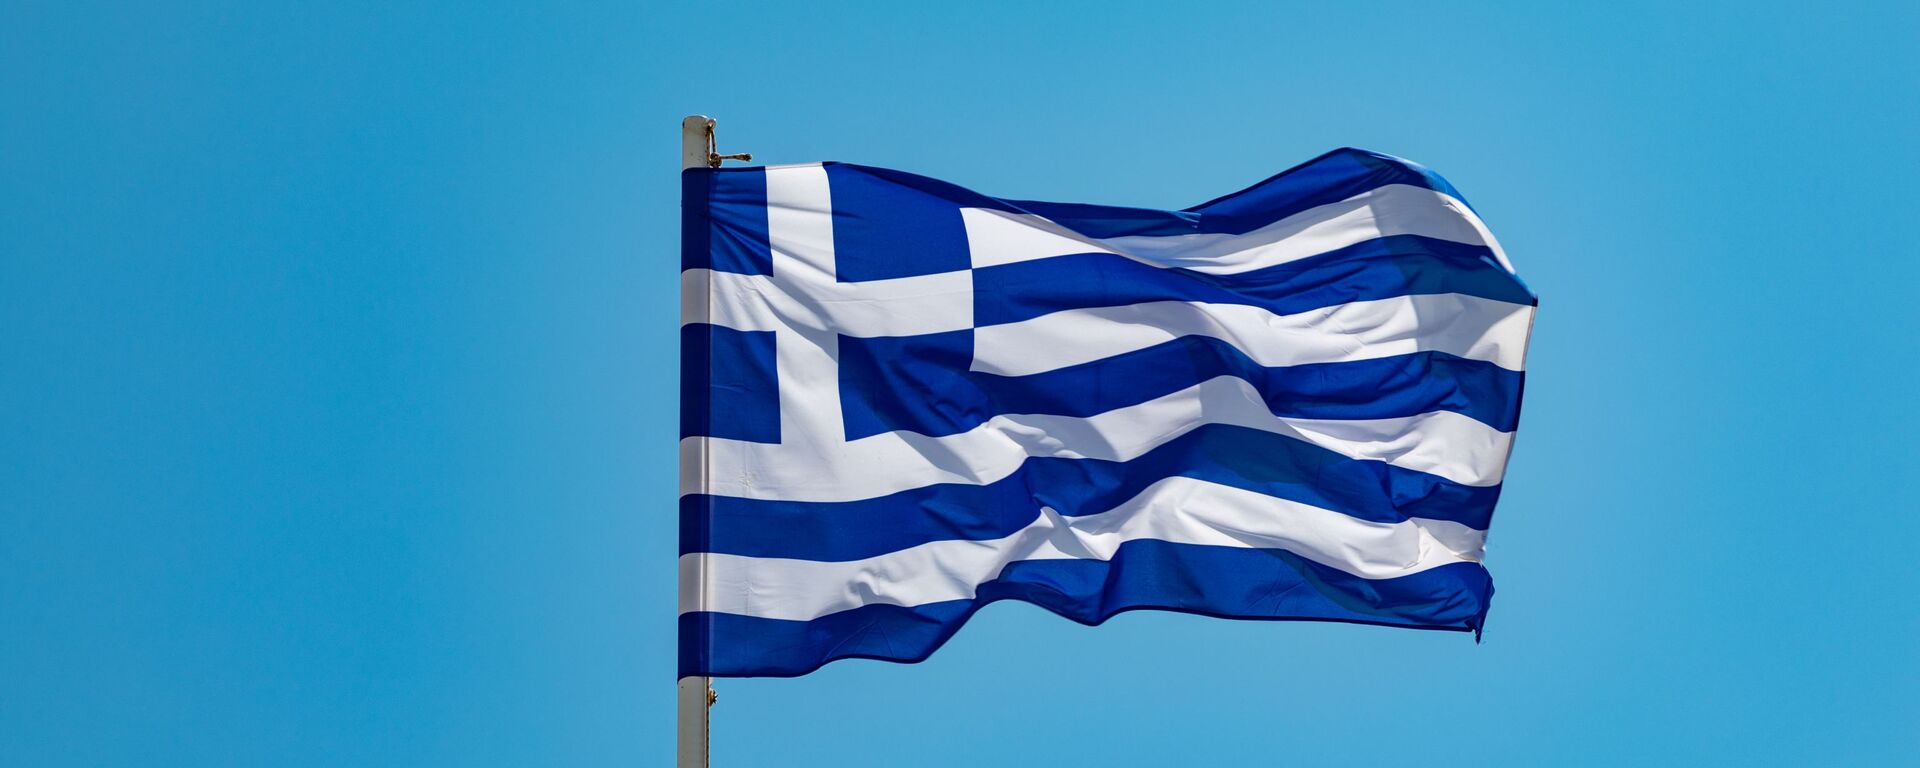 Una bandera de Grecia - Sputnik Mundo, 1920, 22.03.2021